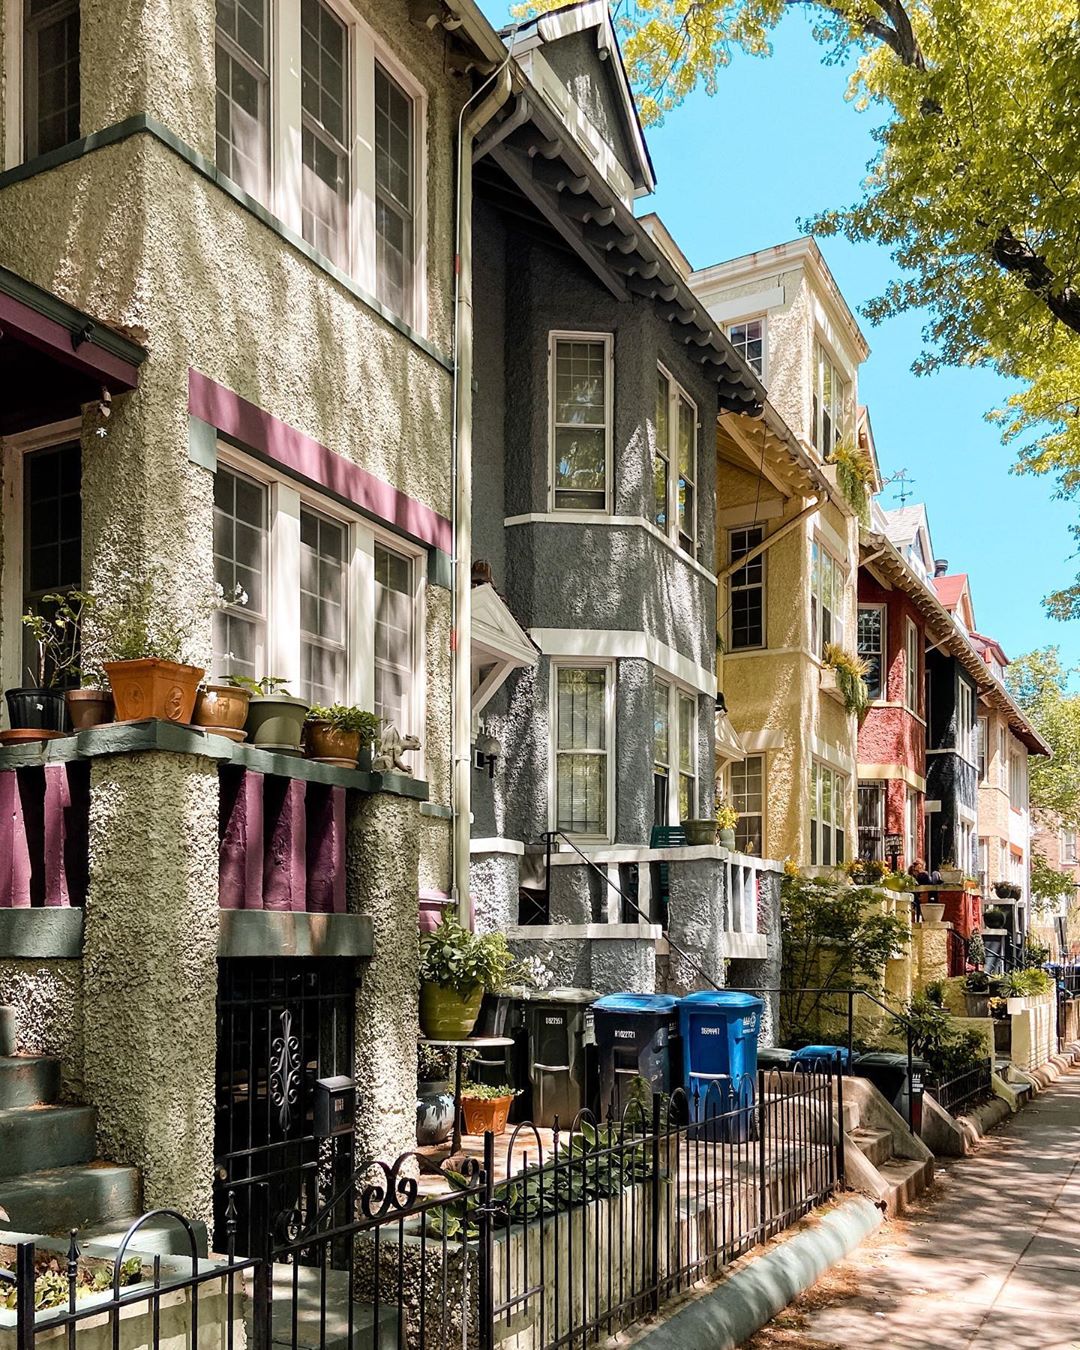 Two Story Walk Up Row Houses in Washington, DC neighborhood Adams Morgan. Photo by Instagram user @coryandthecity